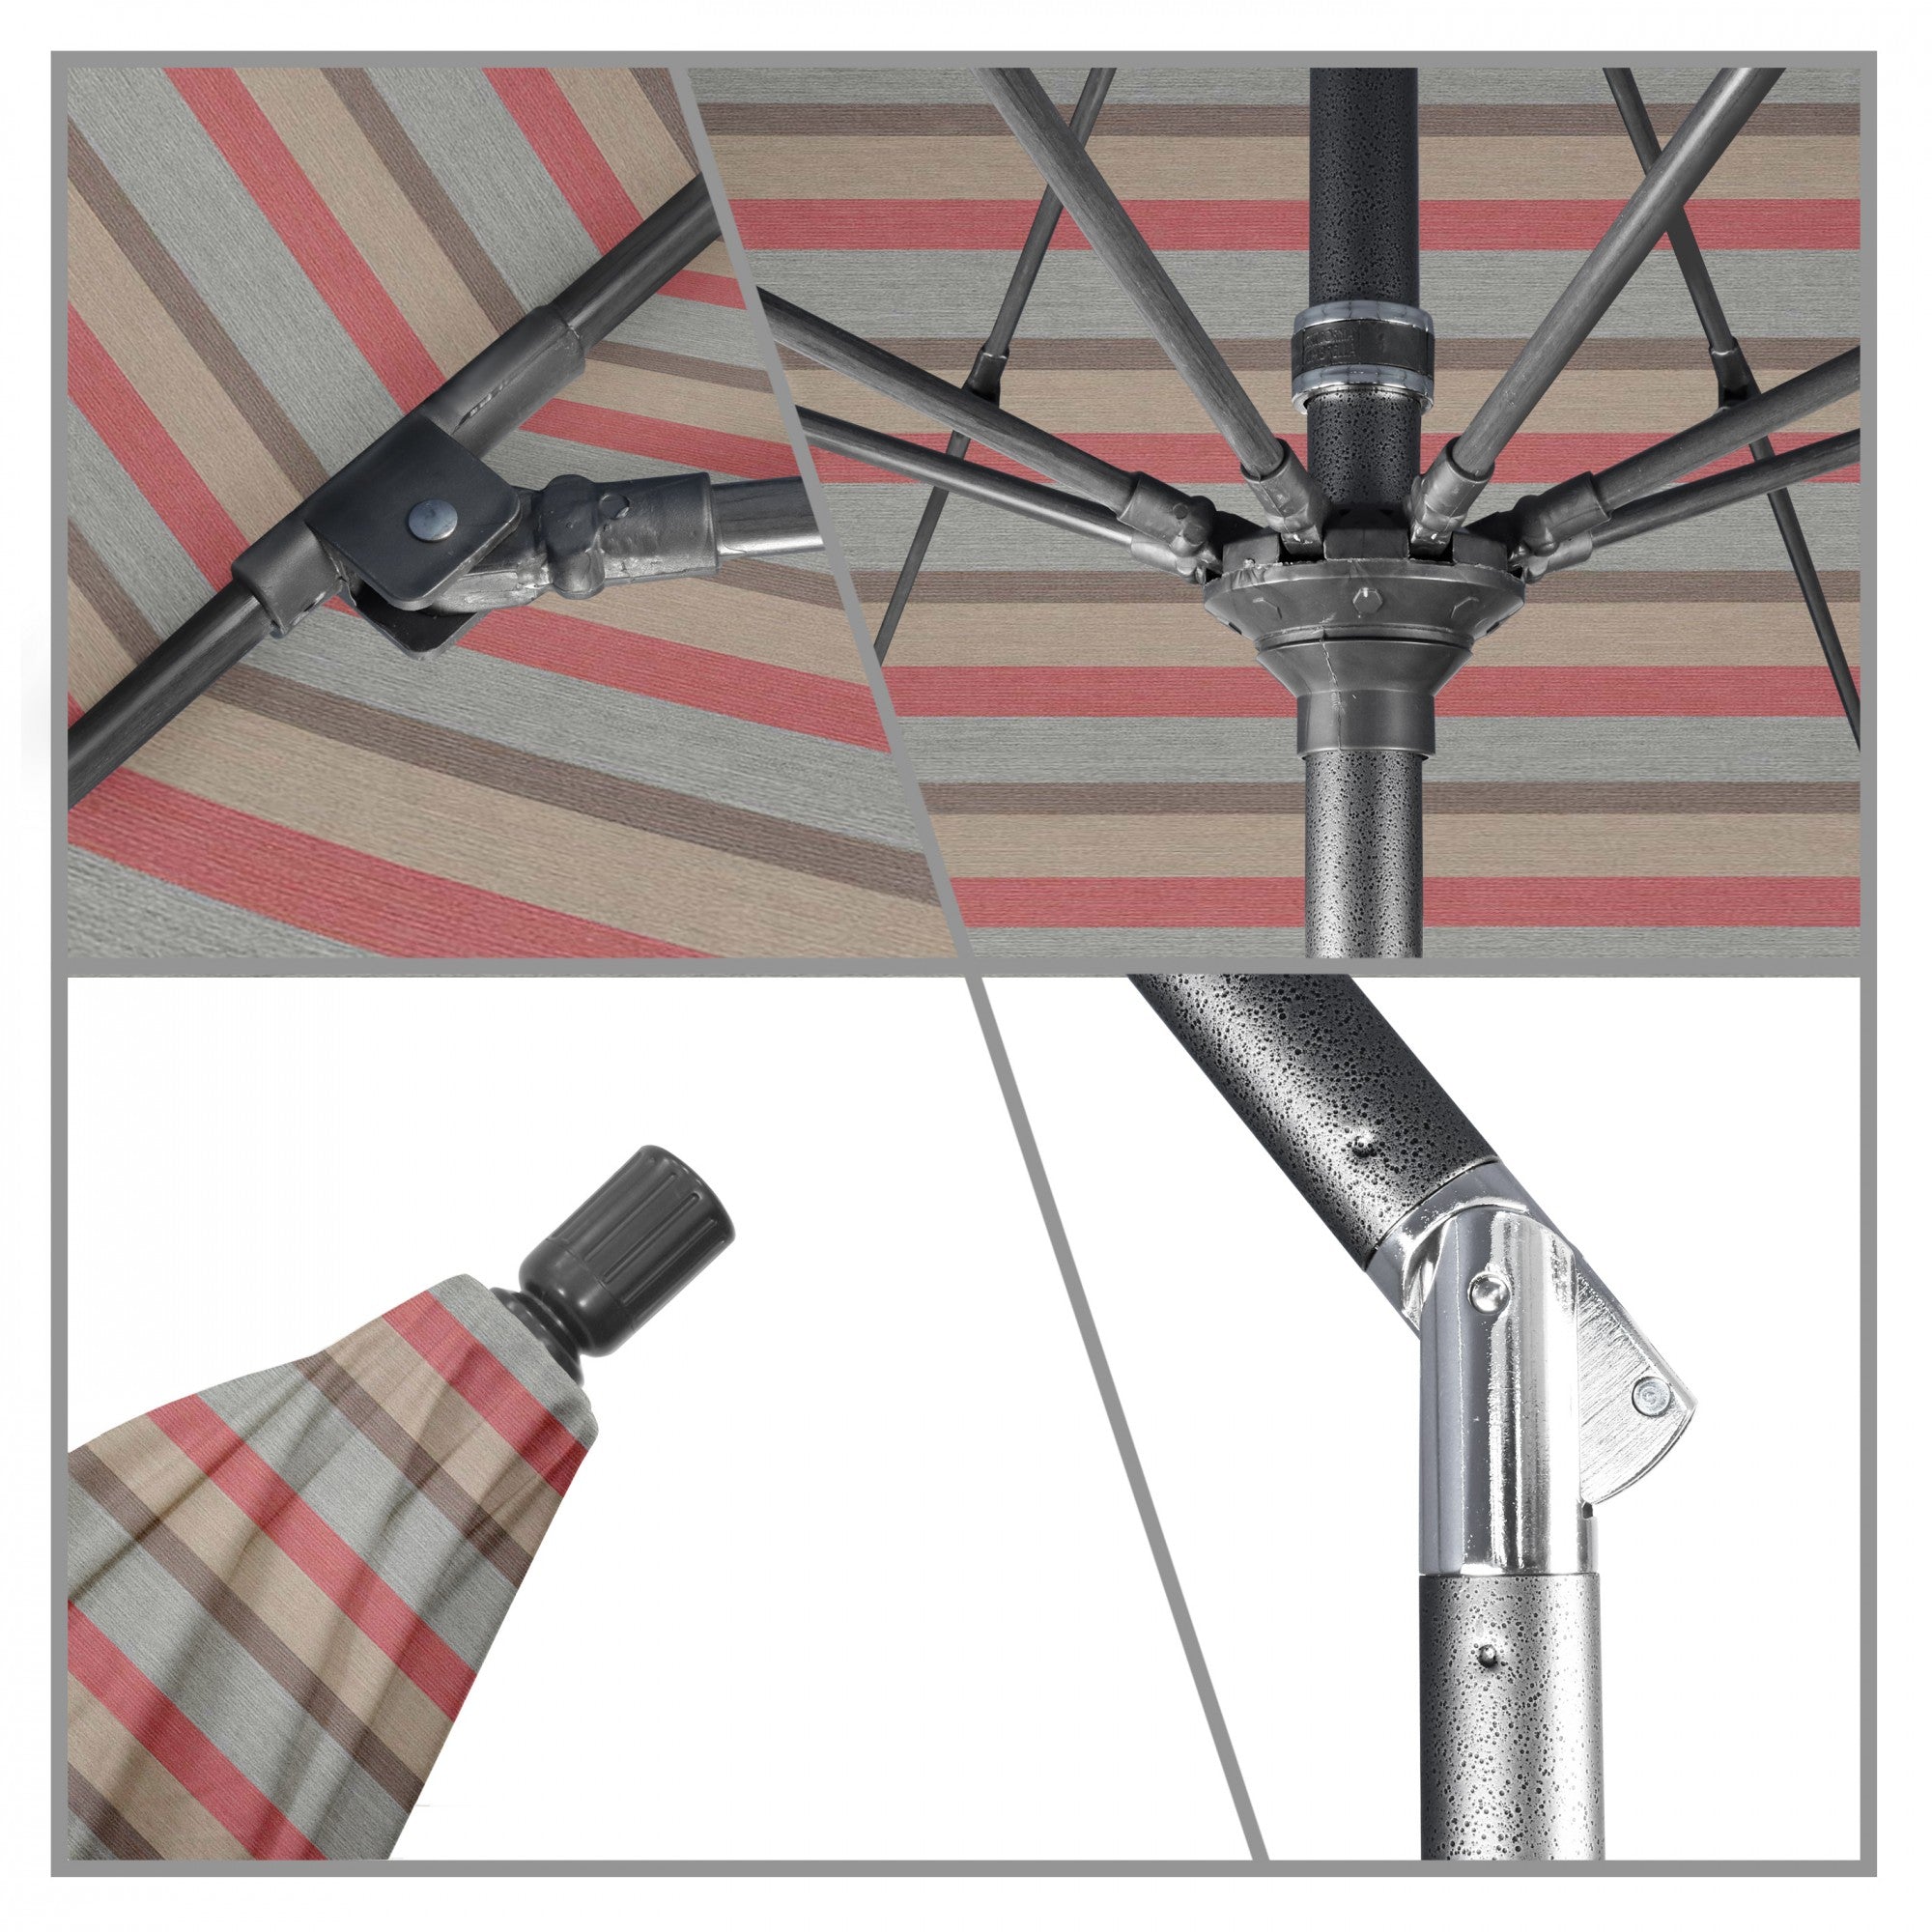 California Umbrella - 9' - Patio Umbrella Umbrella - Aluminum Pole - Gateway Blush           - Sunbrella  - GSCUF908010-58038